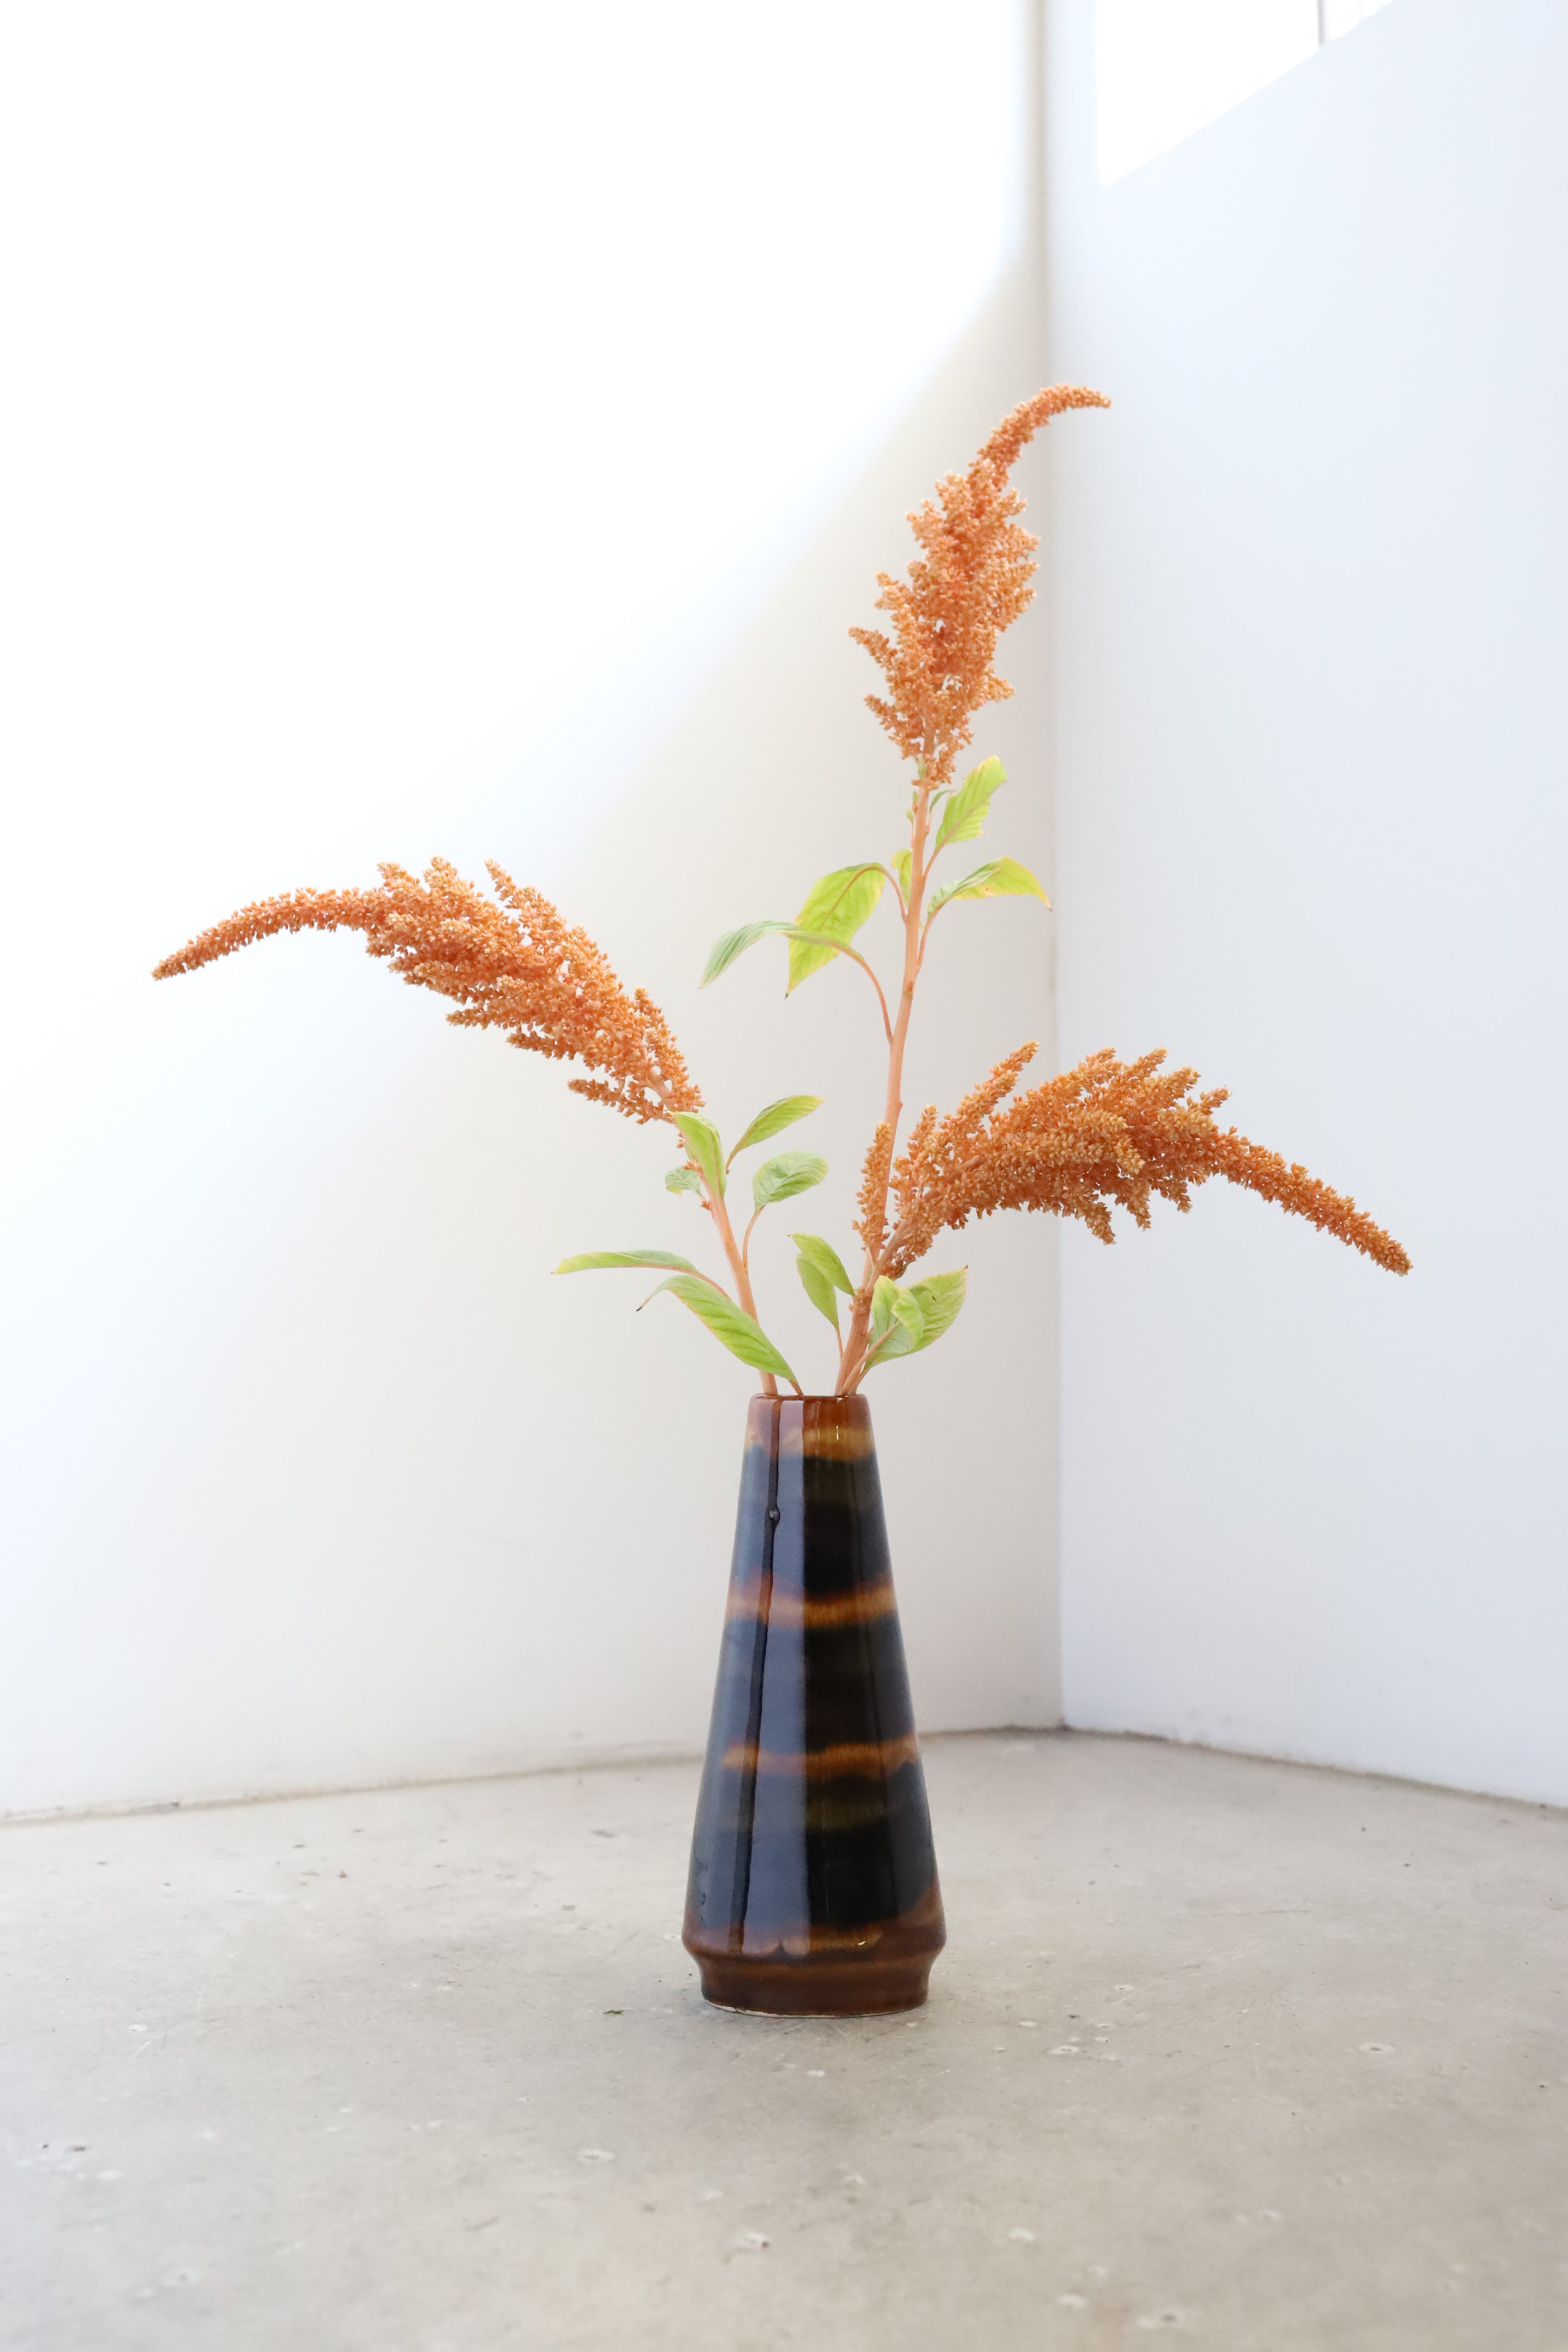 October Vase #8